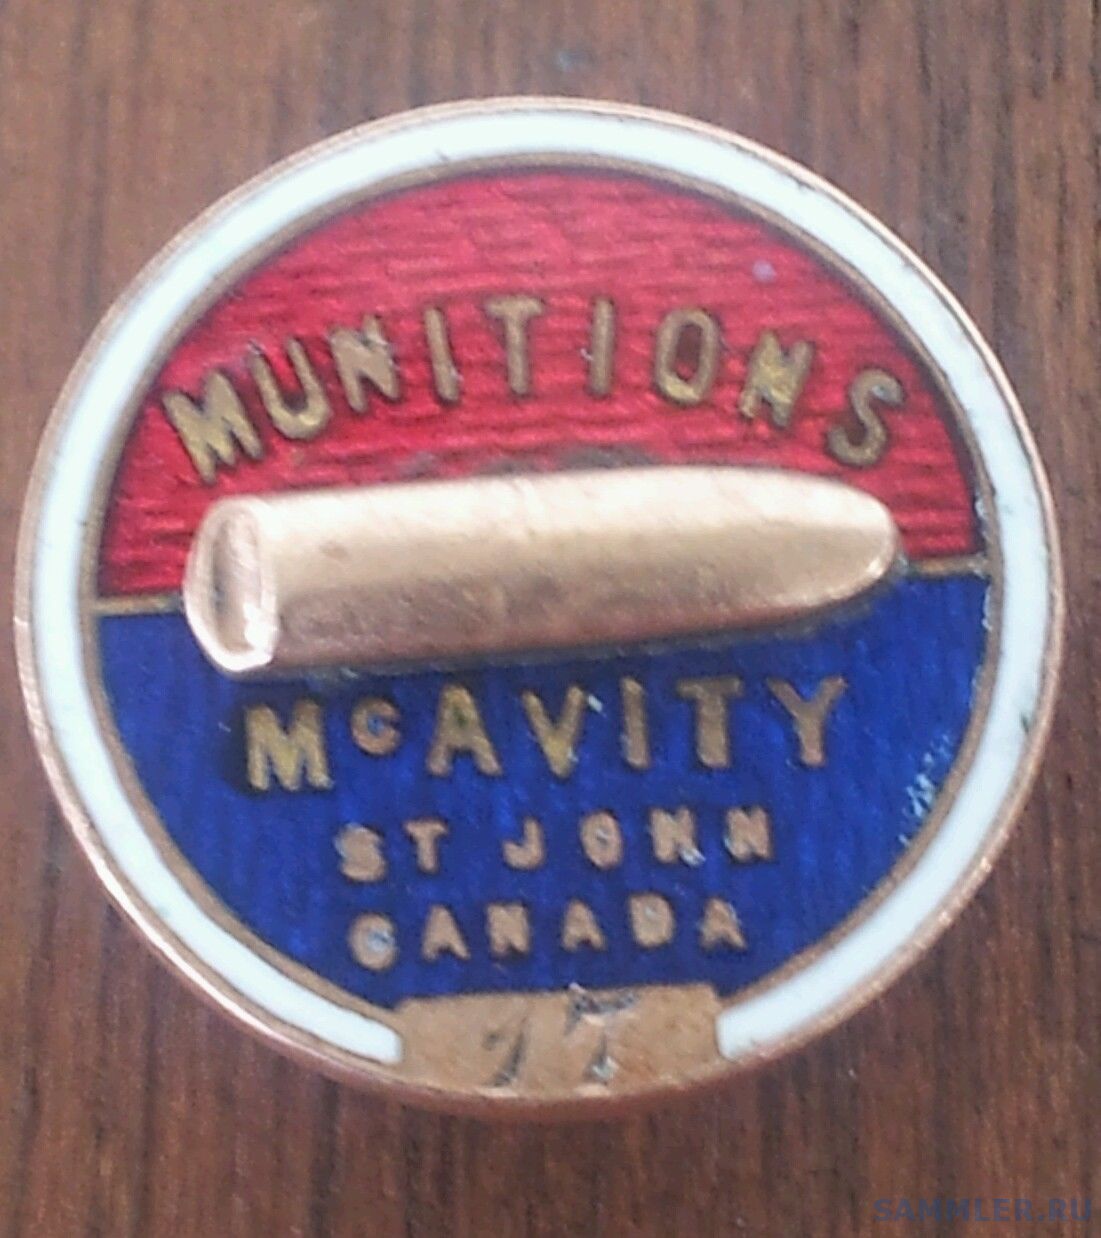 McAvity Munitions St Johns Canada.jpg